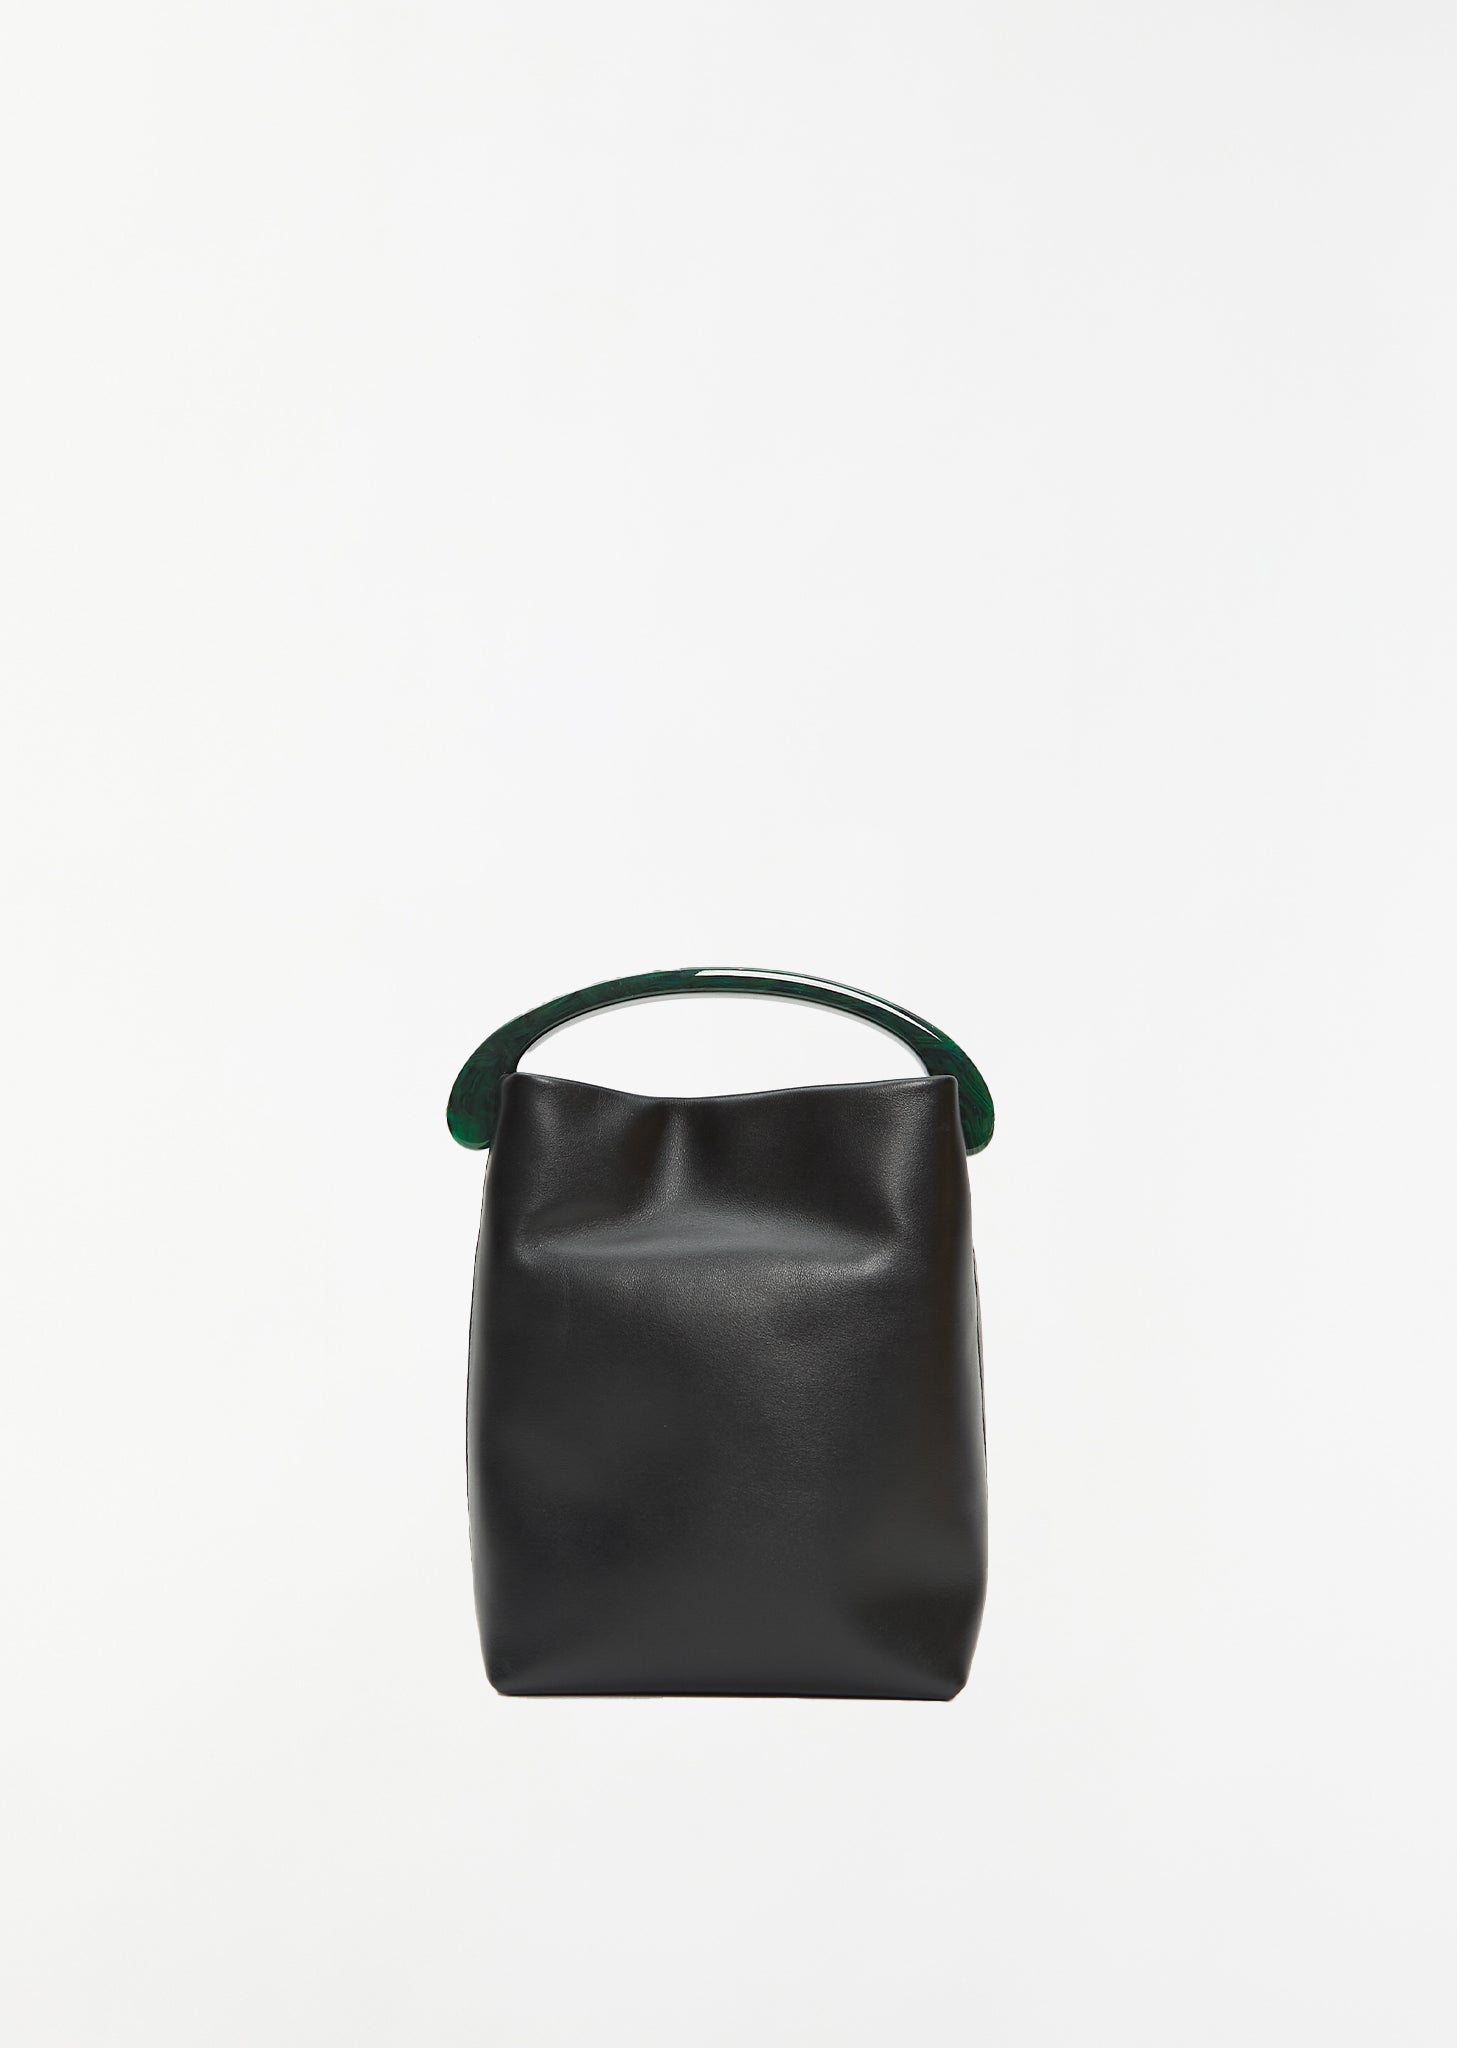 Aesther Ekme Sac Bucket Smooth Leather Shoulder Bag In Black